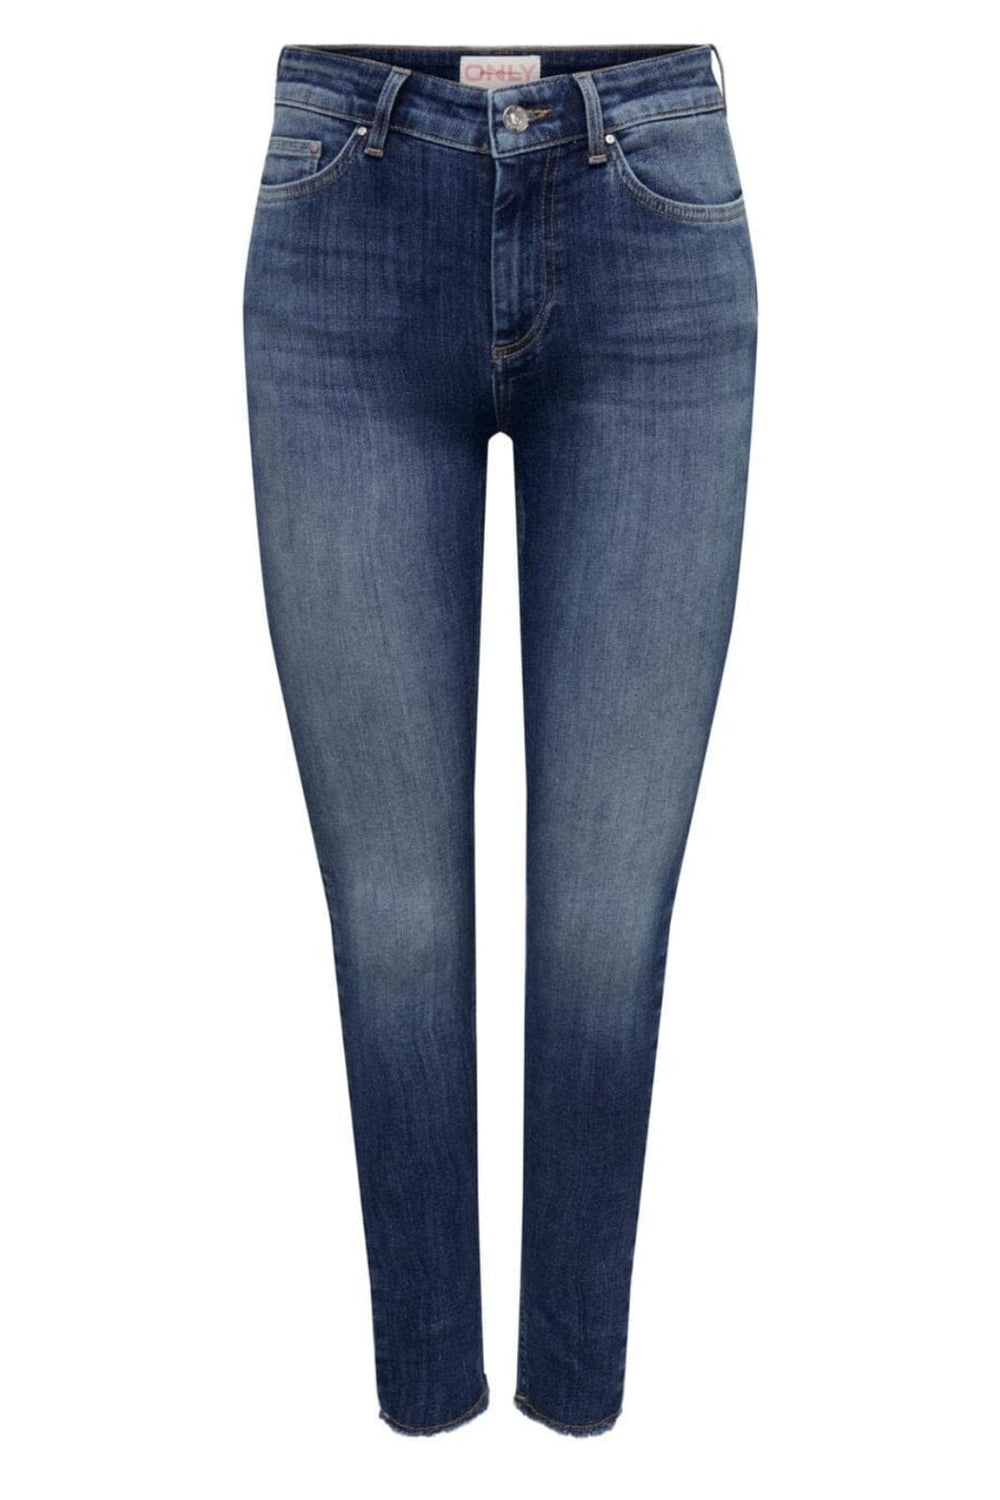 Only - Onlblush Mid Sk - 3972348 Medium Blue Denim Jeans 